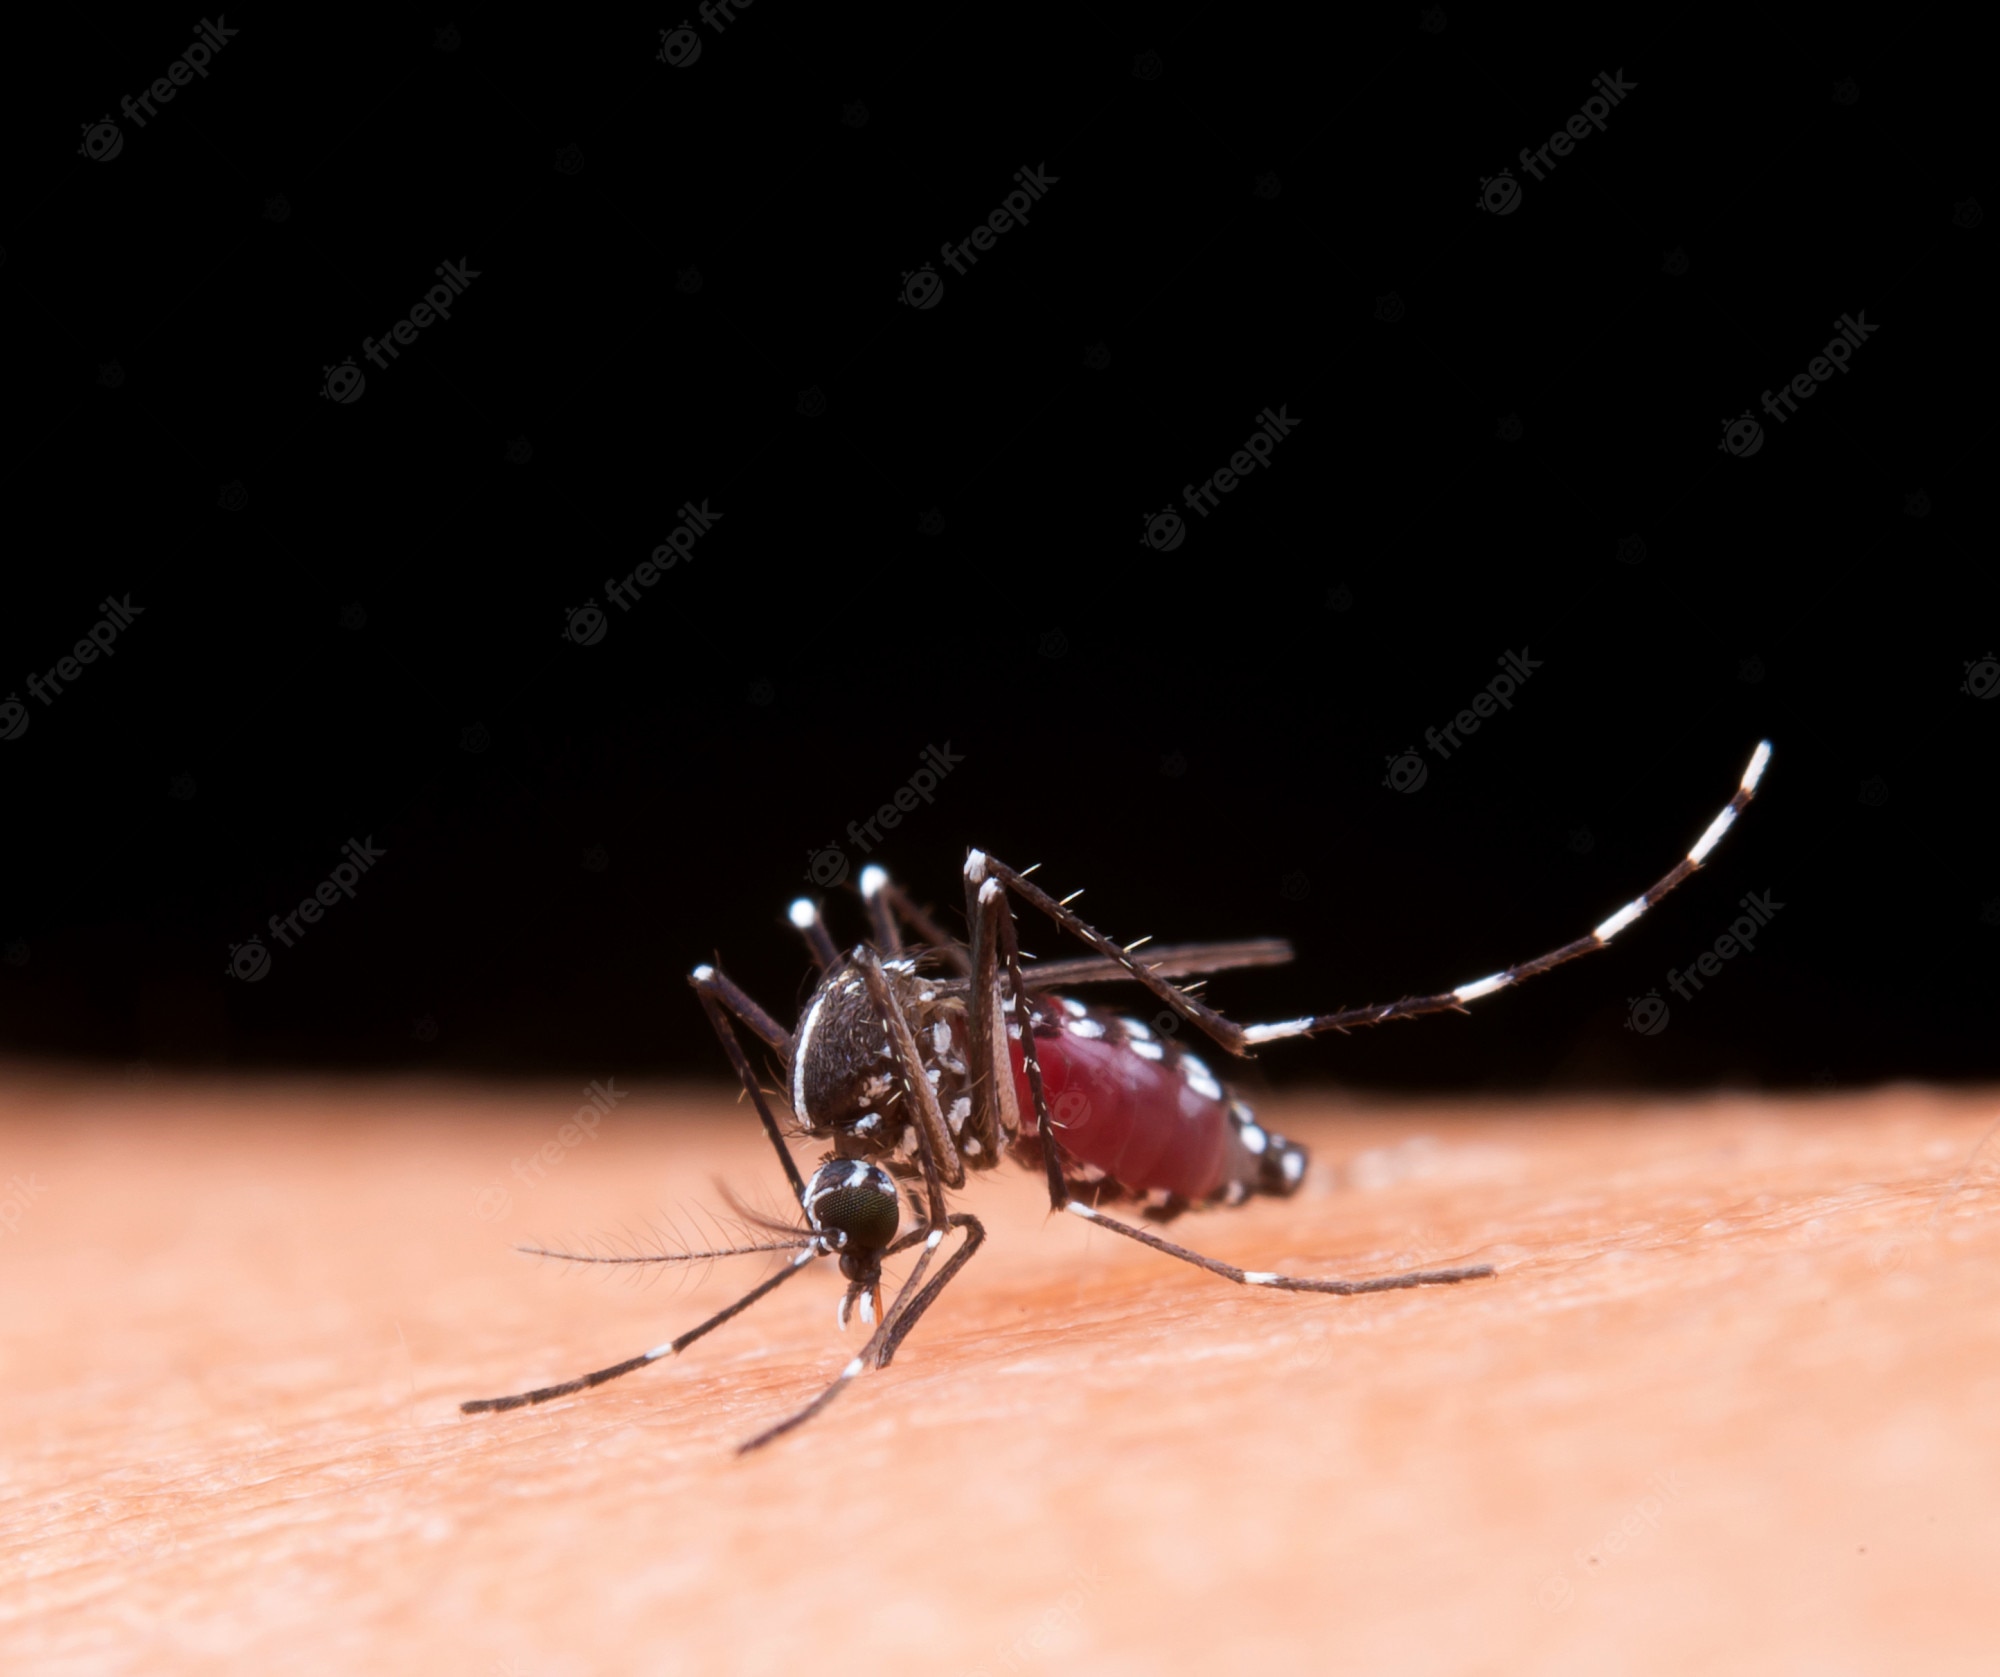 https://www.nepalminute.com/uploads/posts/mosquito_1150-7964-dengue - freepik1663655150.jpg